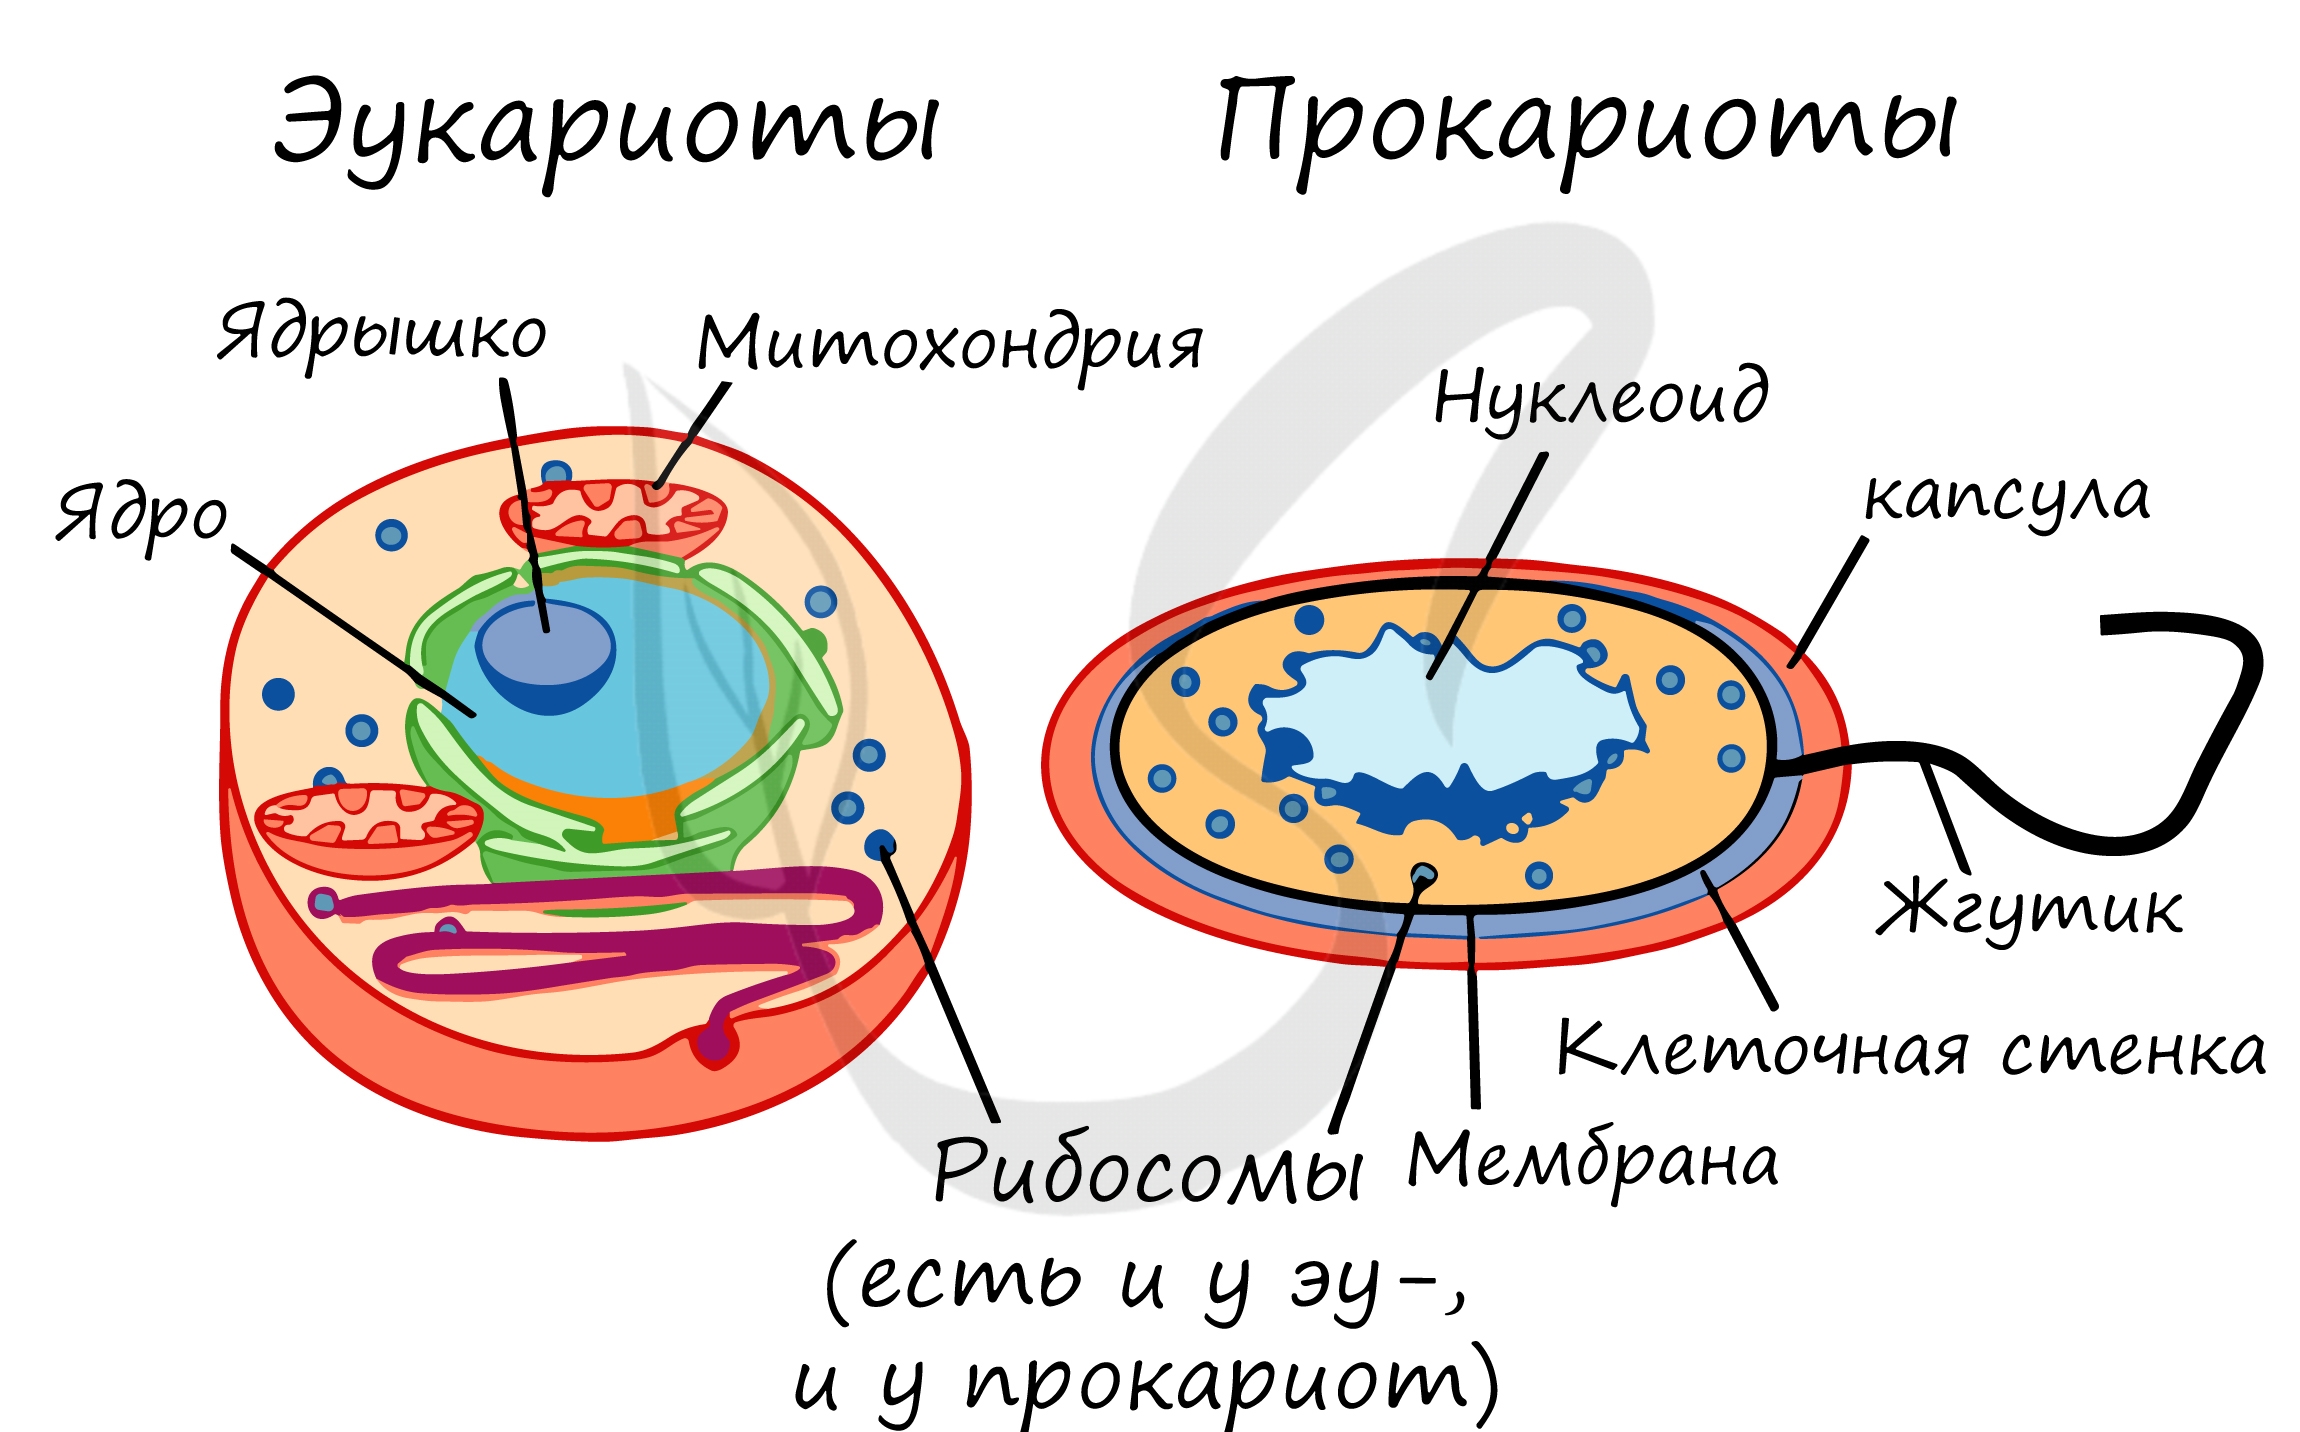 Оболочка клетки прокариот. Строение клетки прокариот и эукариот. Строение бактерий прокариоты и эукариоты. Отличие прокариот от эукариот рисунок. Прокариотическая клетка и эукариотическая клетка строение.